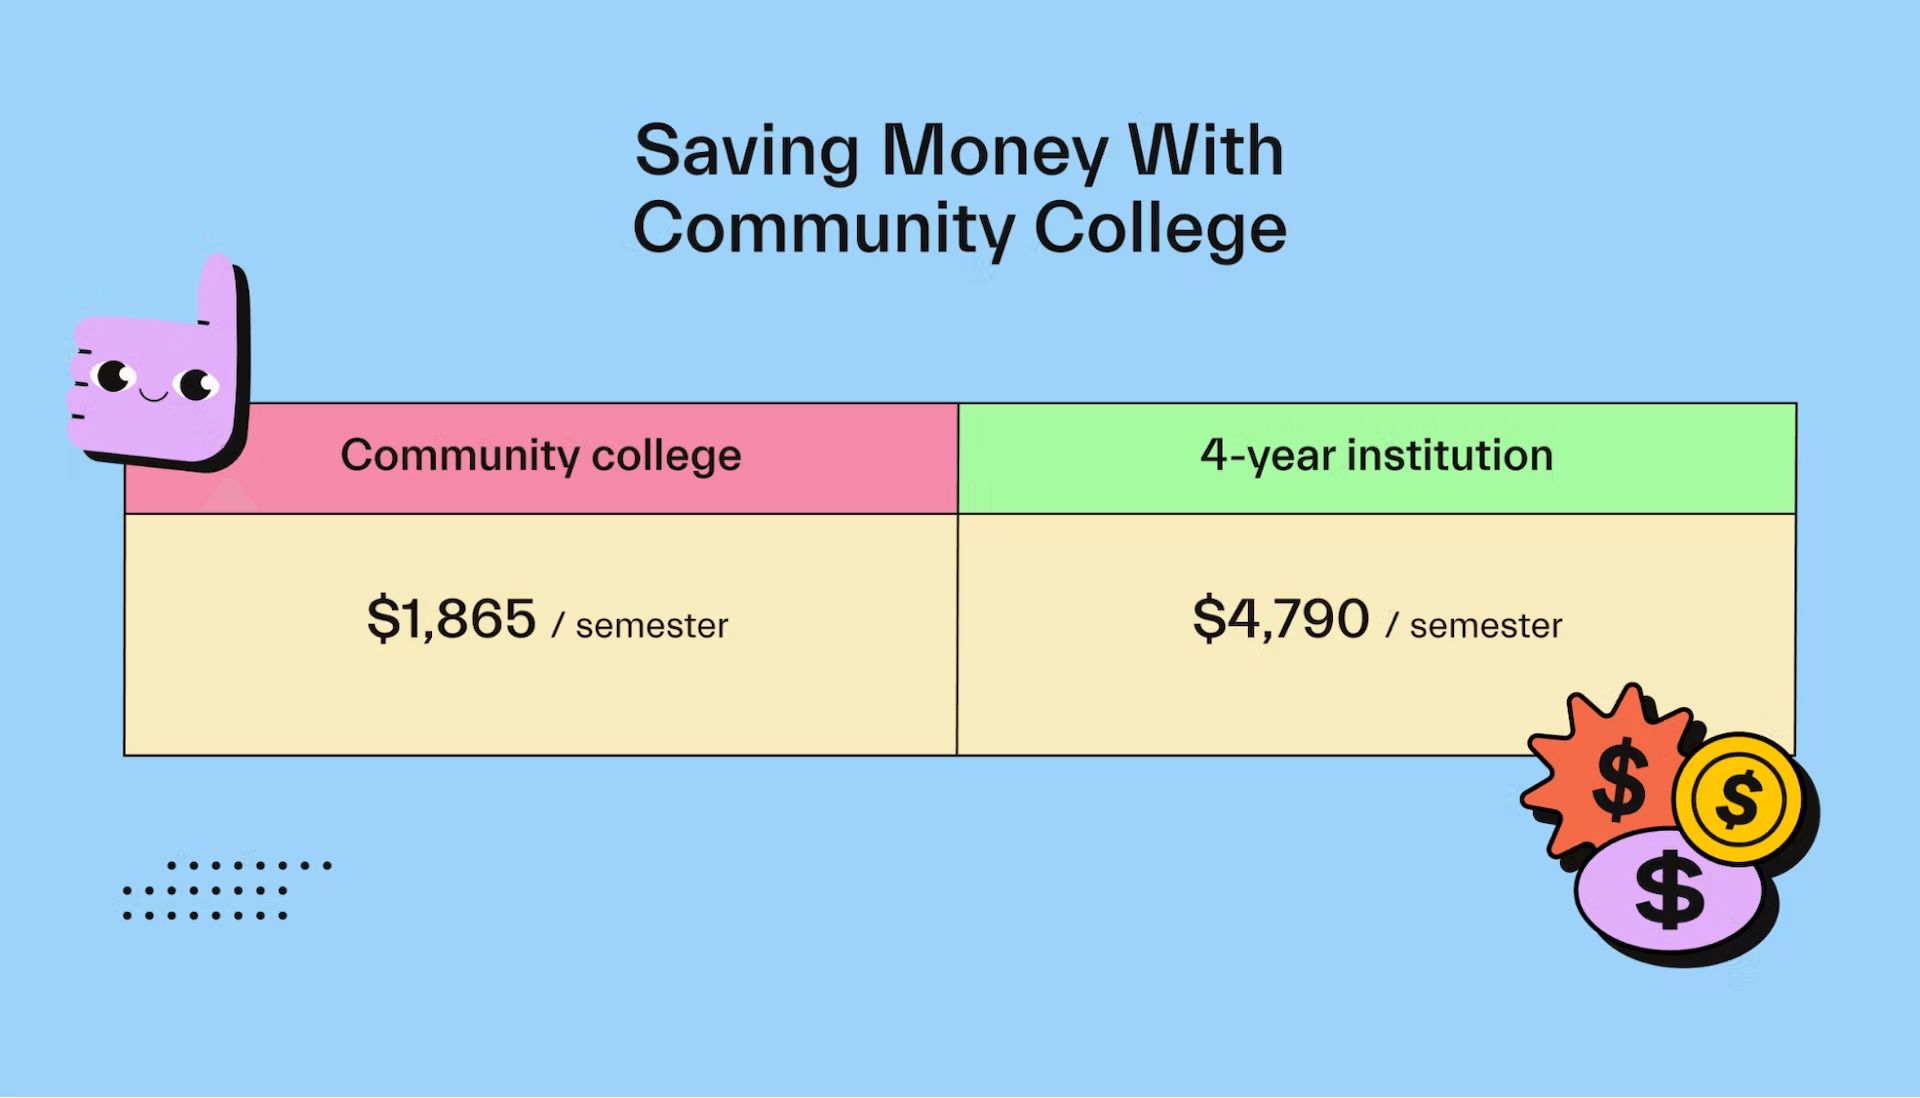 Community college savings